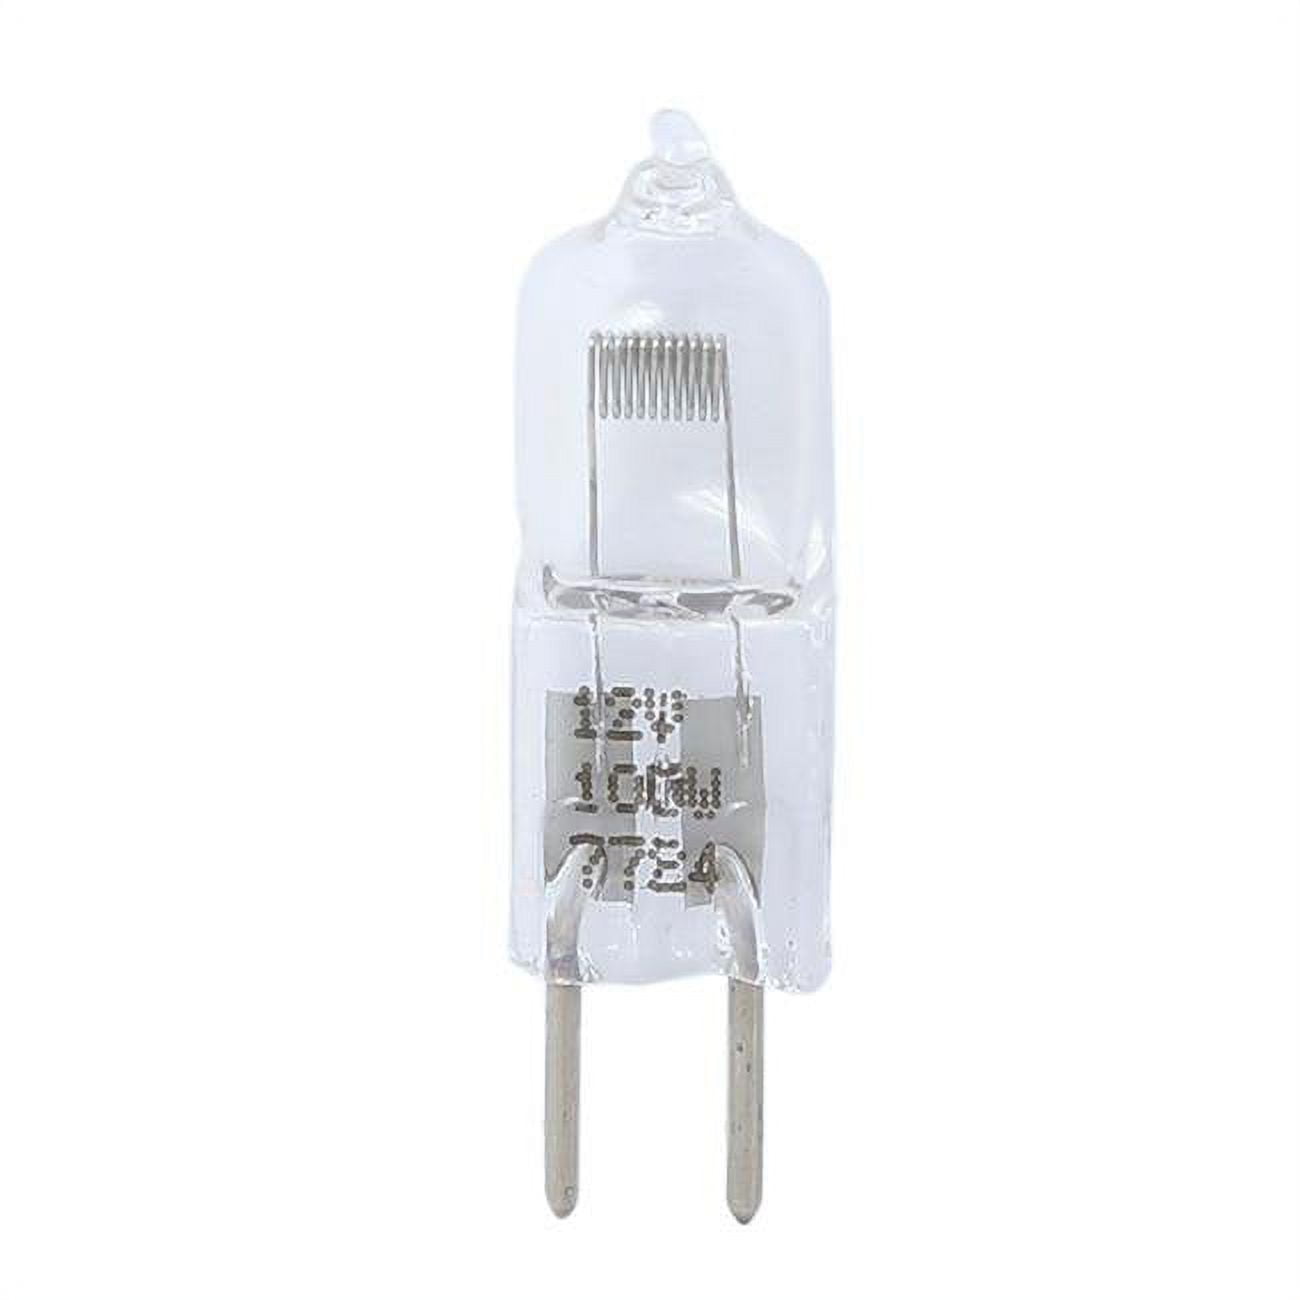 Dny-170222 Halogen Non-reflector 7724 100w Gy6.35 12v Light Bulb